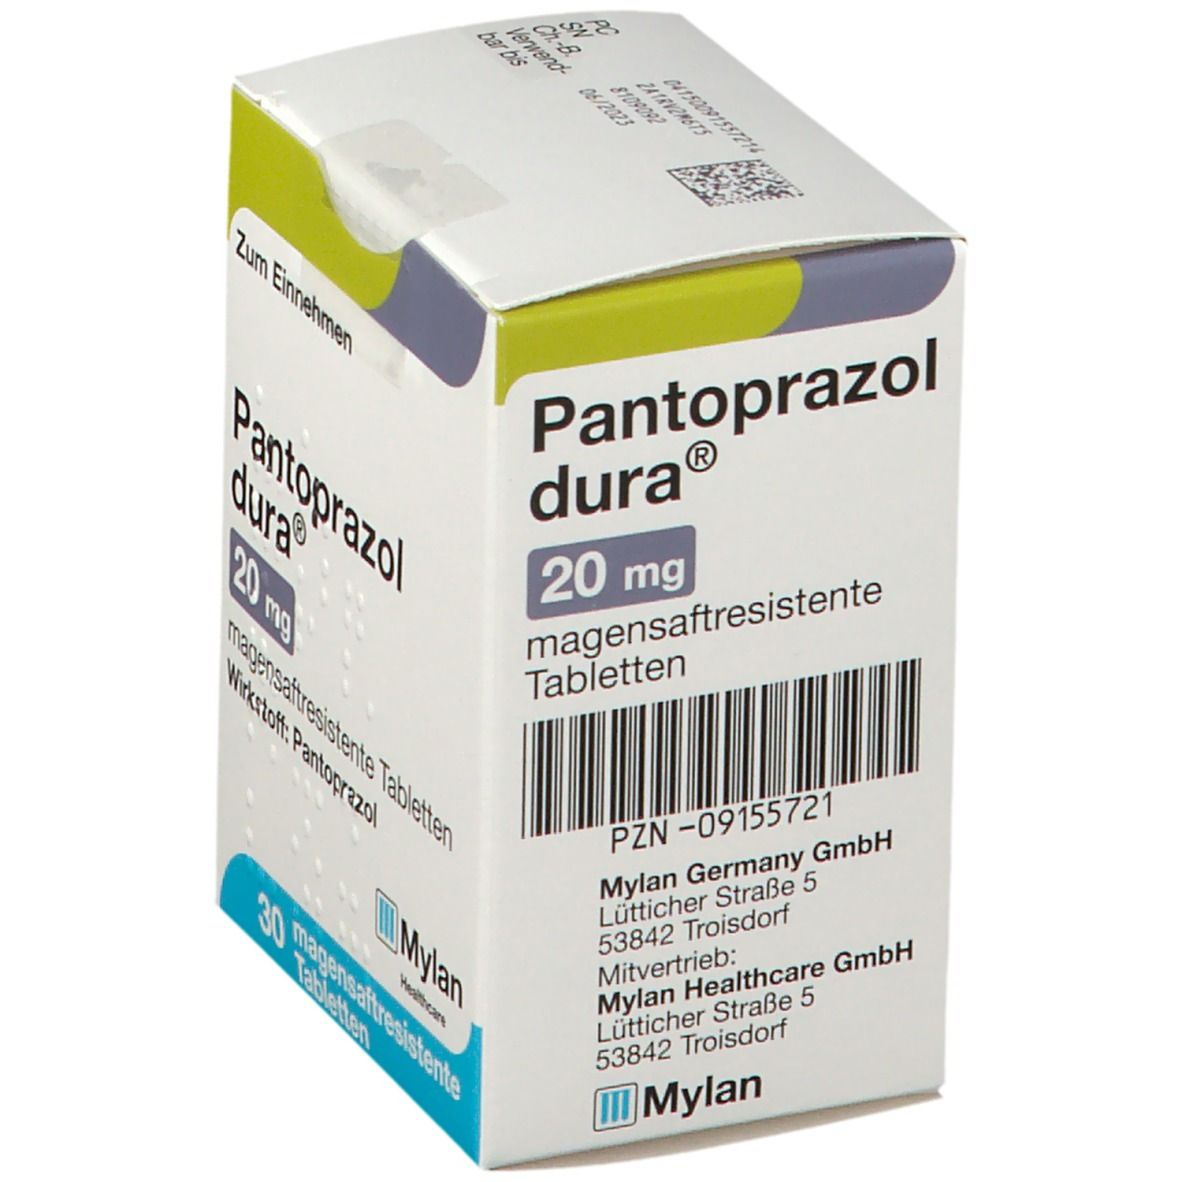 Pantoprazol dura® 20 mg